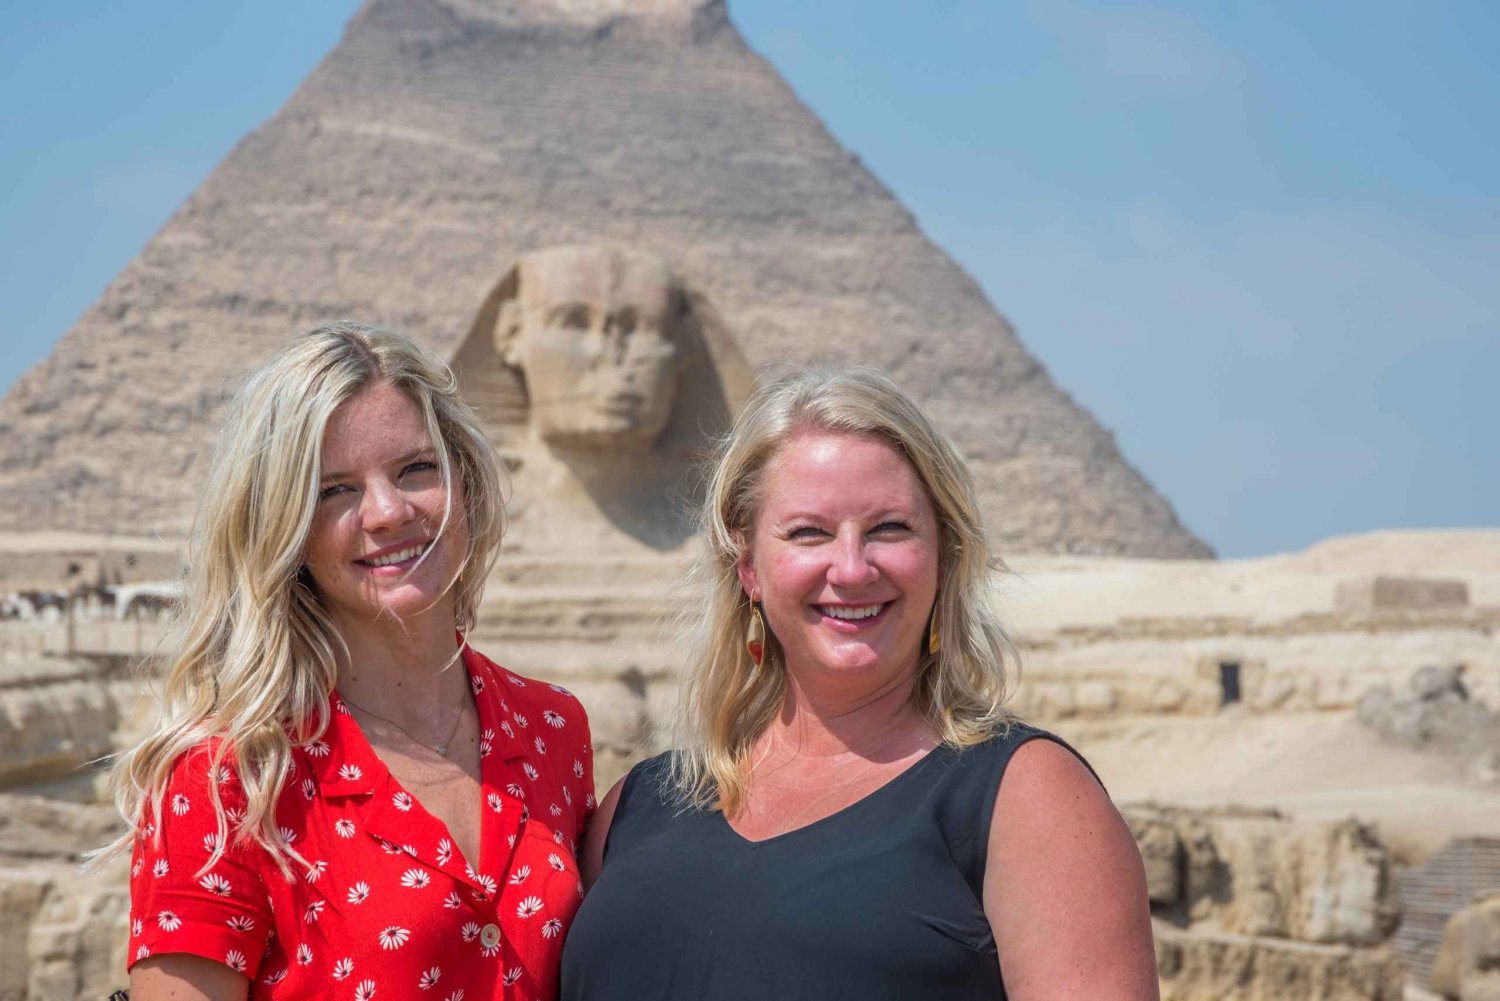 Cairo: Female-Guided Pyramids, Bazaar, and Museum Tour